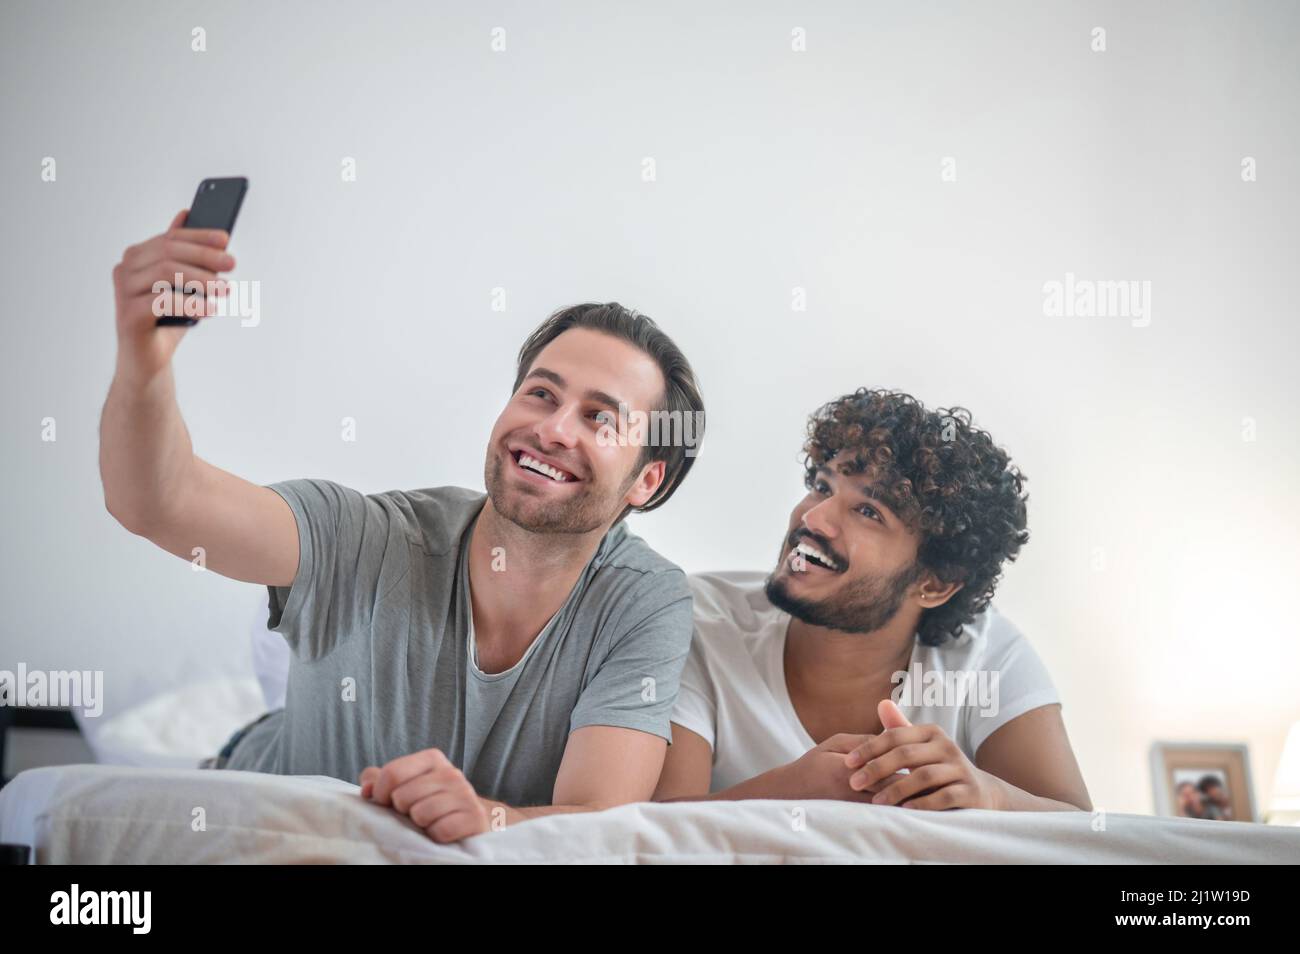 Two gay men taking selfies in the bedroom Stock Photo